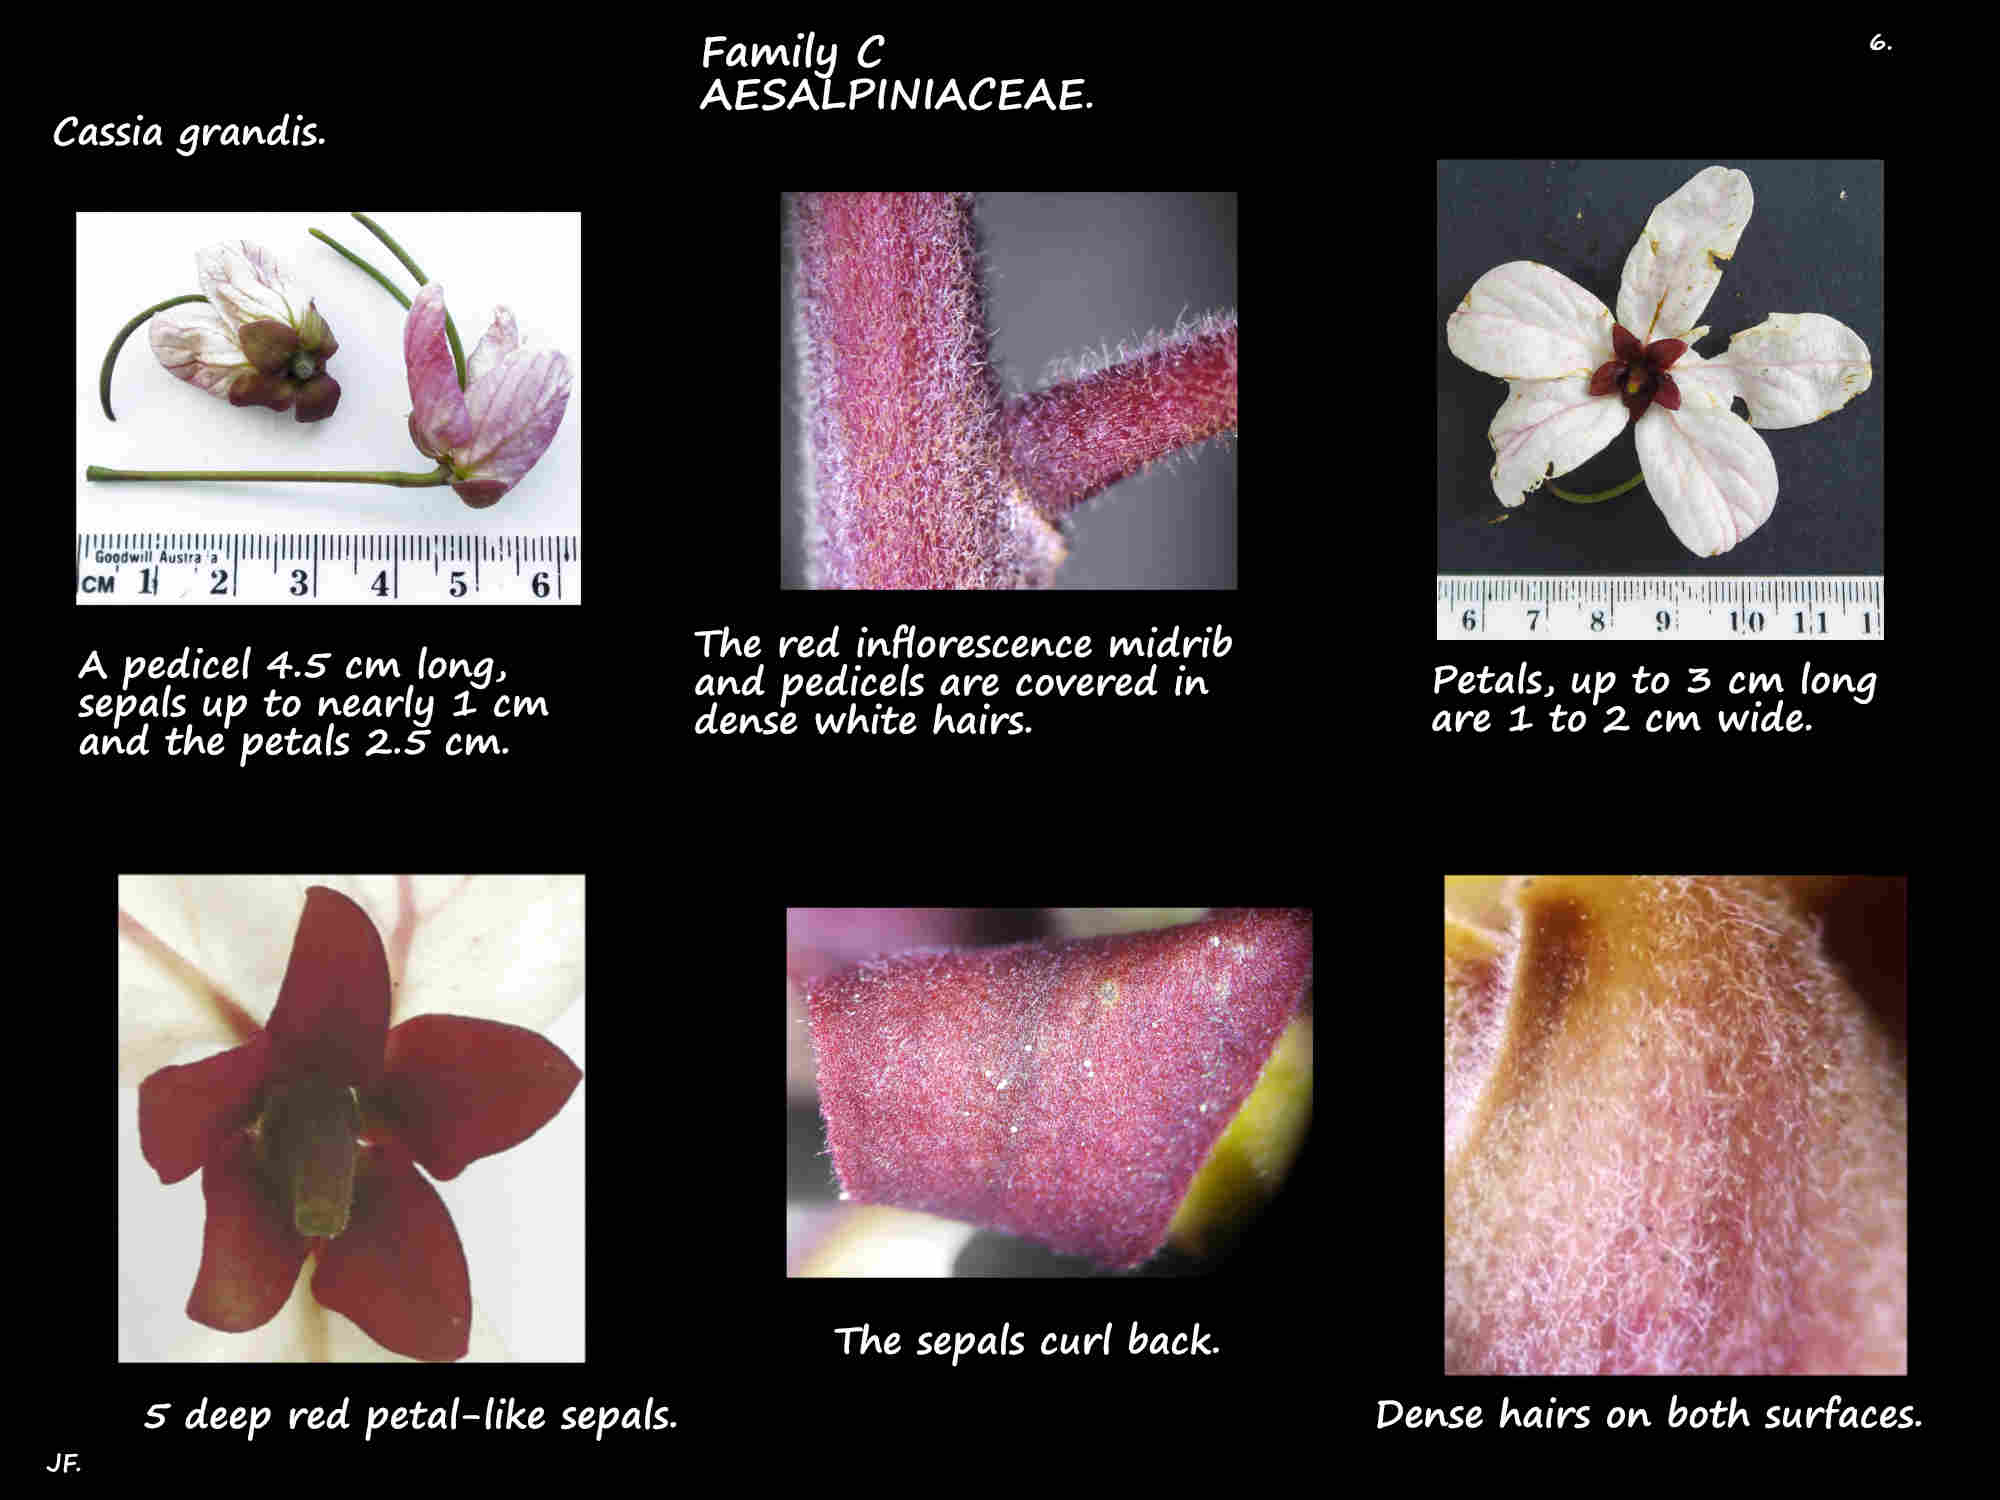 6 The sepals of Cassia grandis flowers